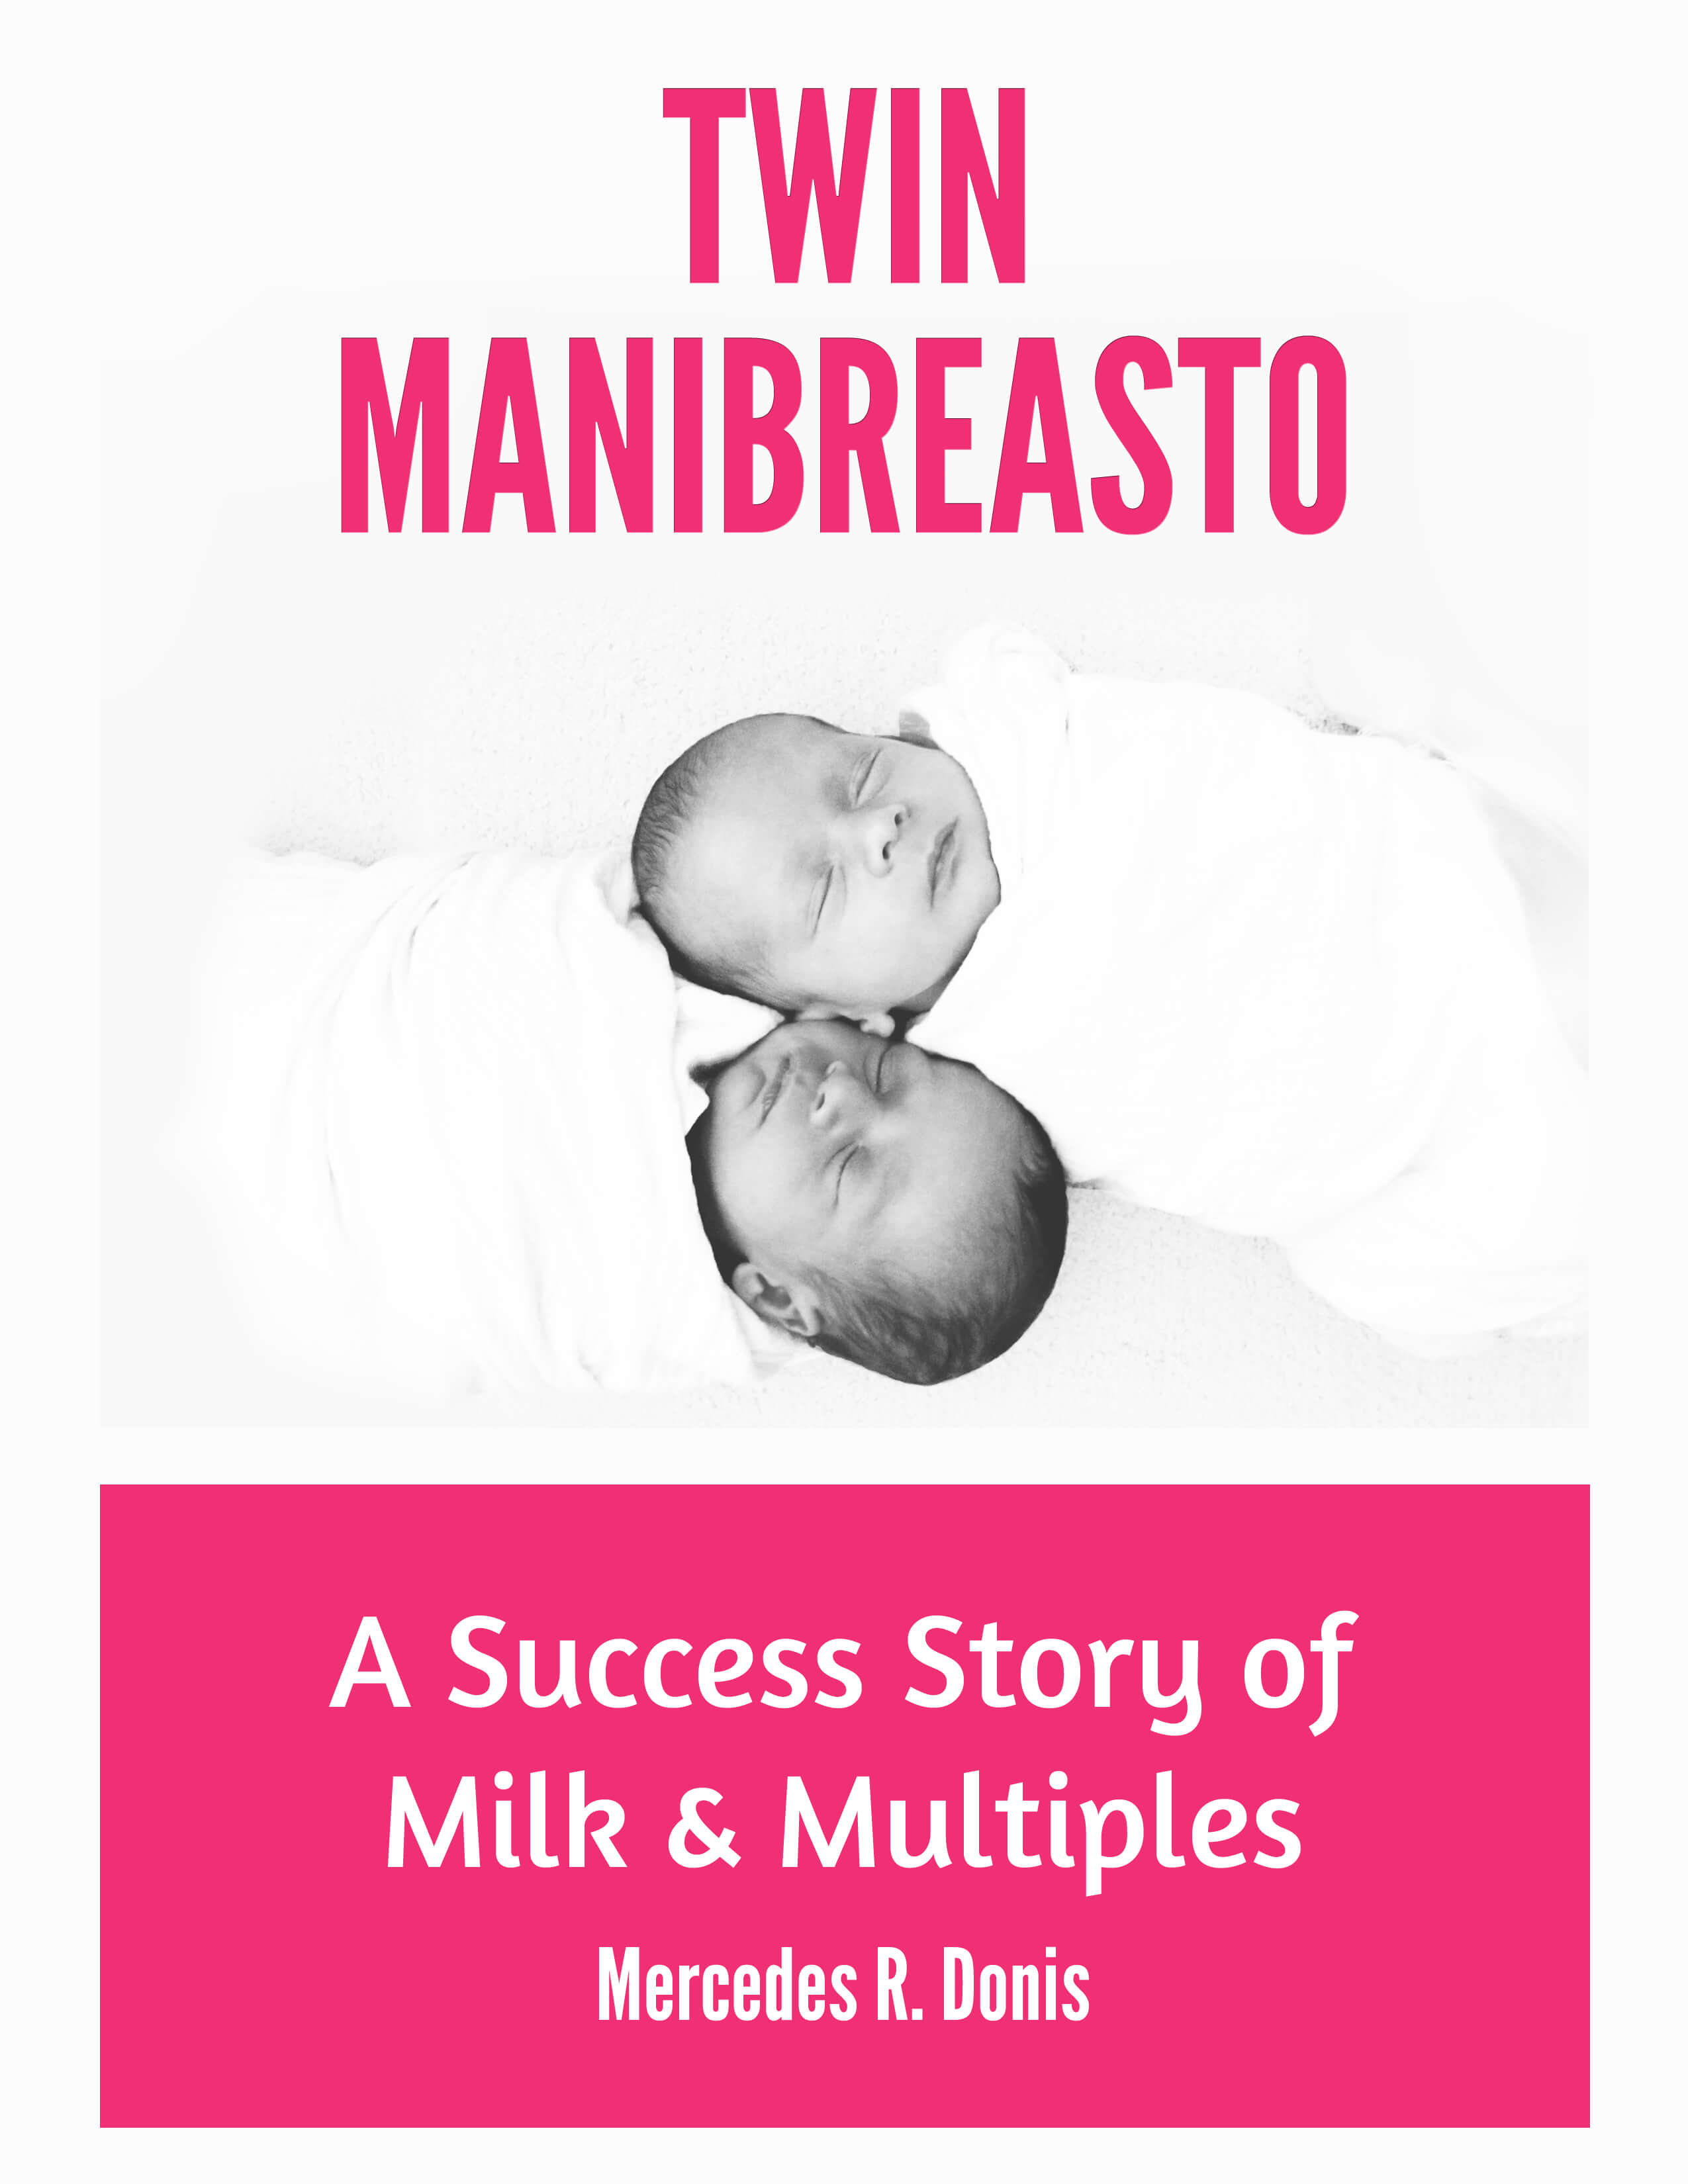 Twin Manibreasto Review   BreastfeedingPlace.com  #twins #breastfeeding